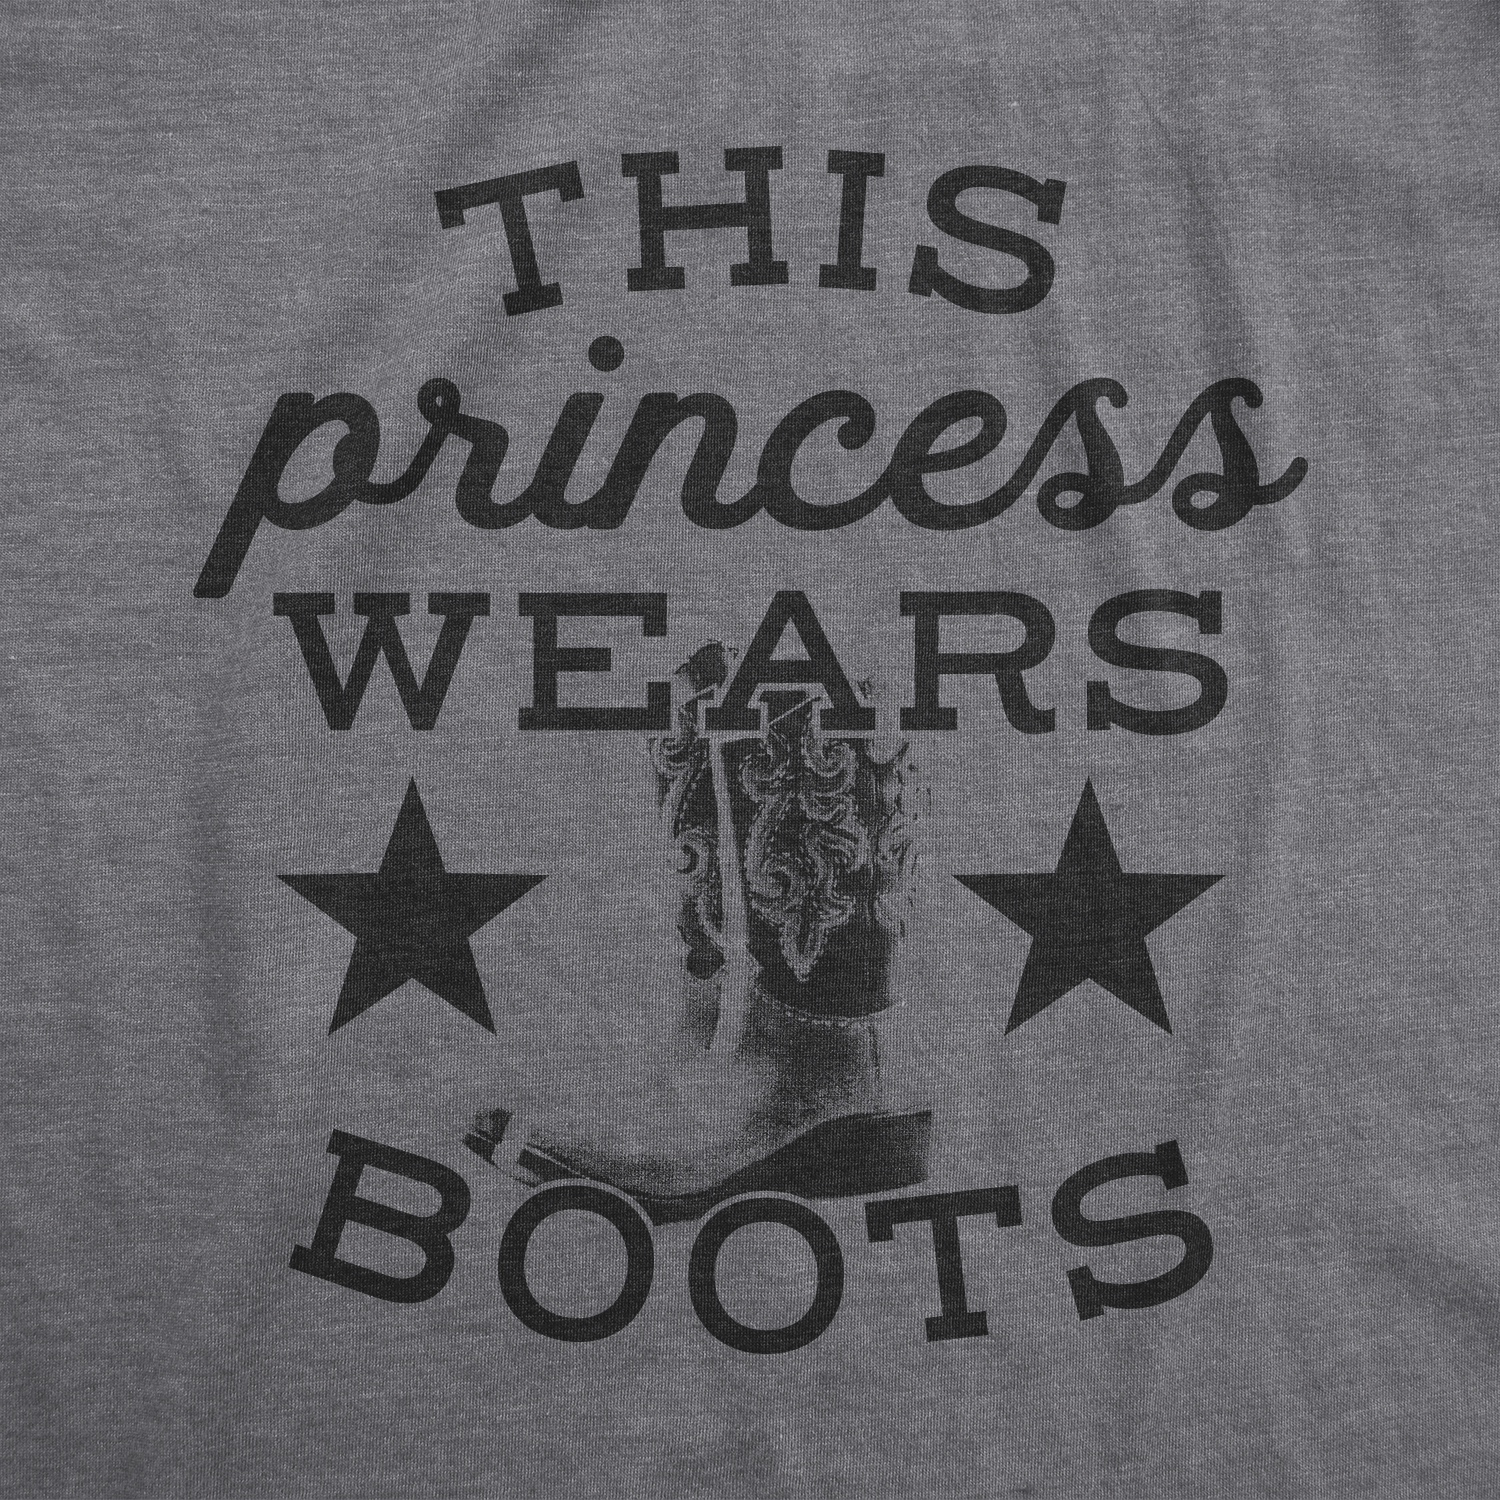 This Princess Wears Boots Women's Tshirt  -  Crazy Dog T-Shirts